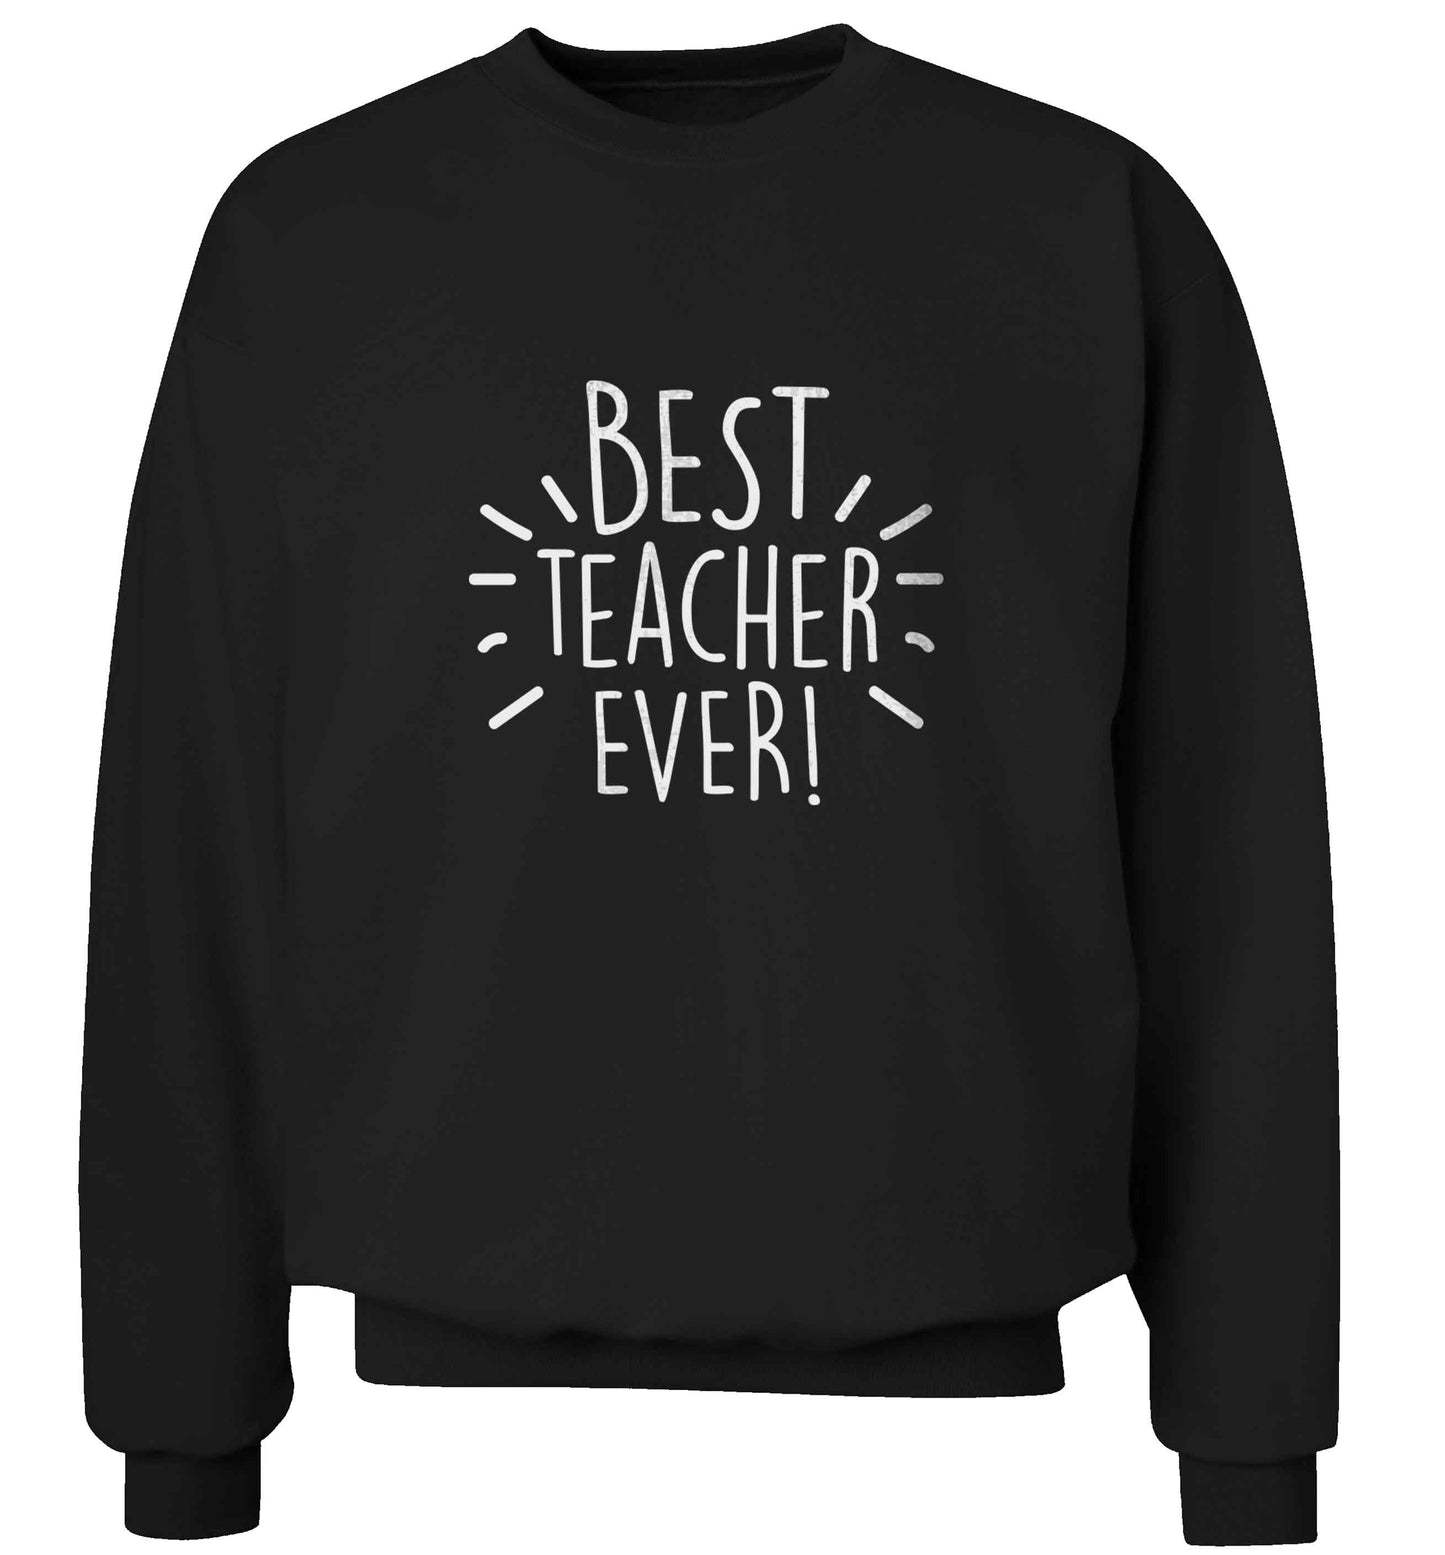 Best teacher ever! adult's unisex black sweater 2XL